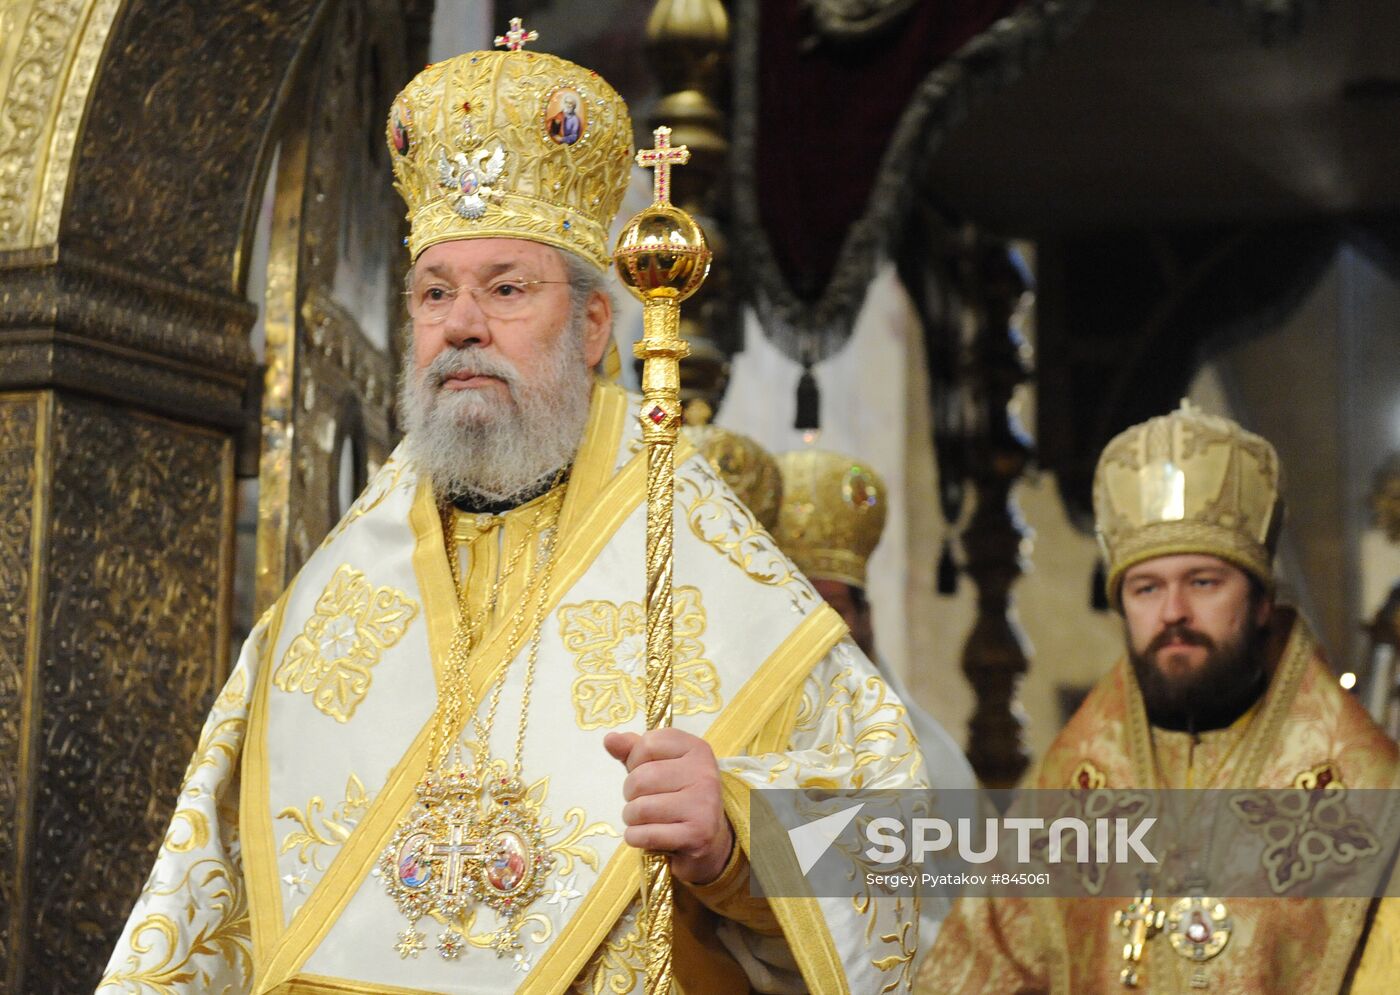 Archbishop Chrysostomos II, Metropolitan Hilarion